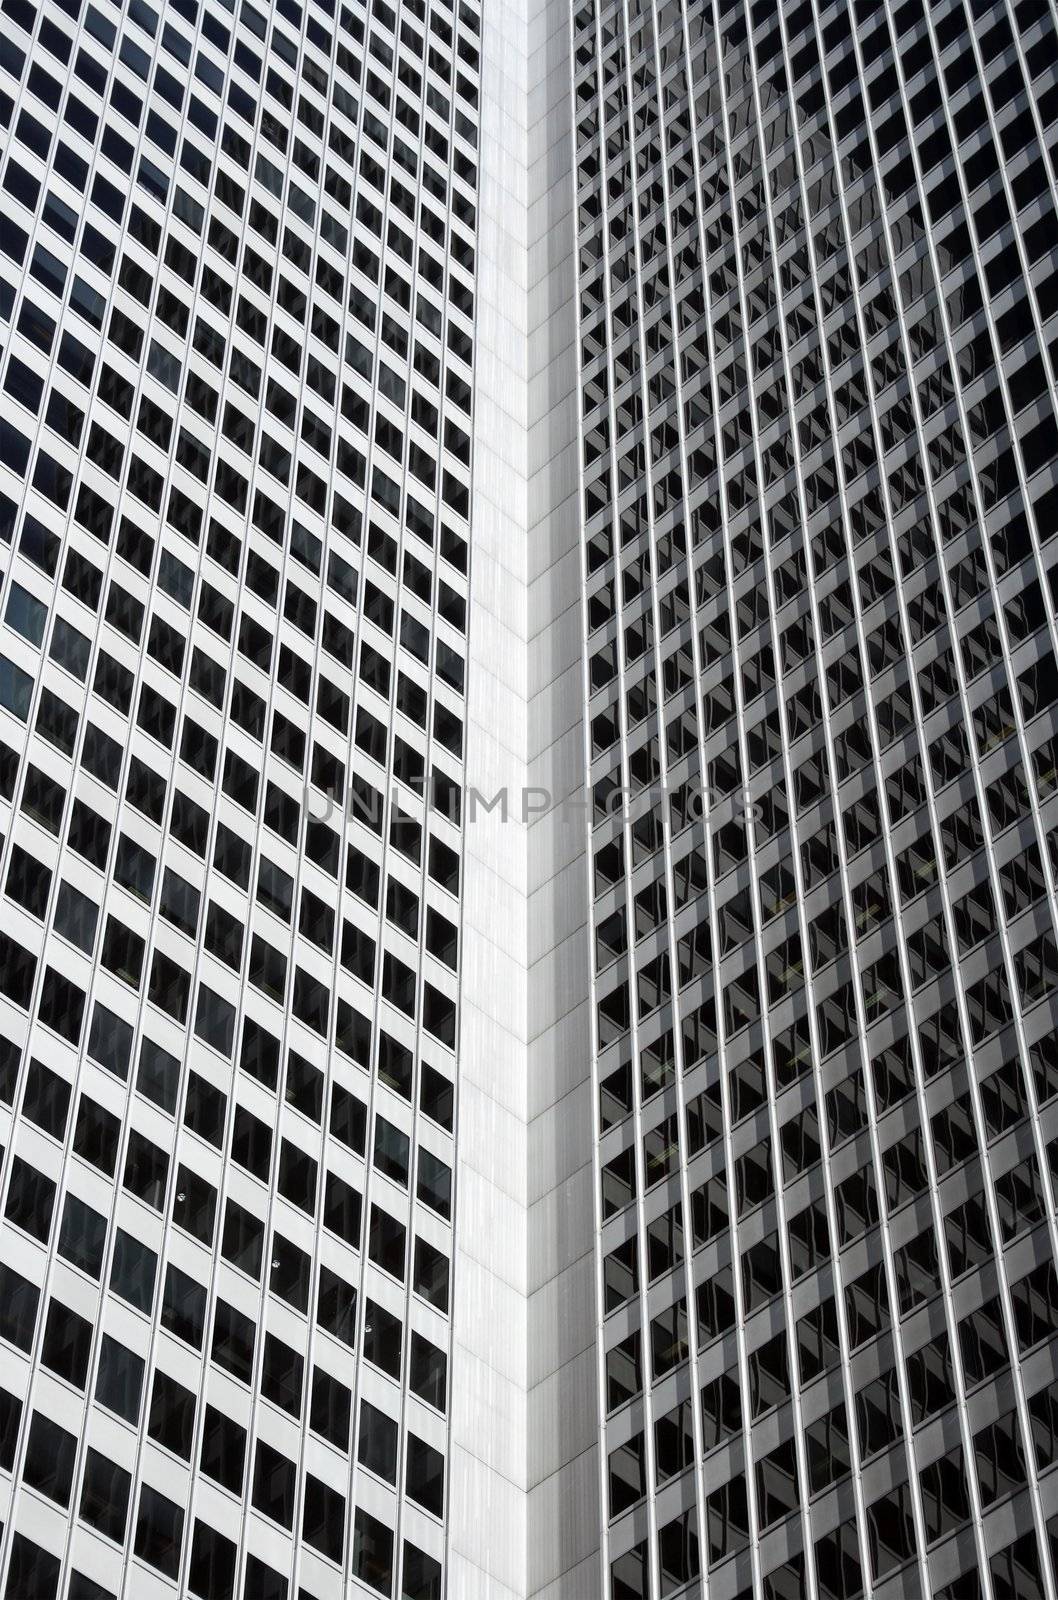 Inside corner and windows of a skyscraper.